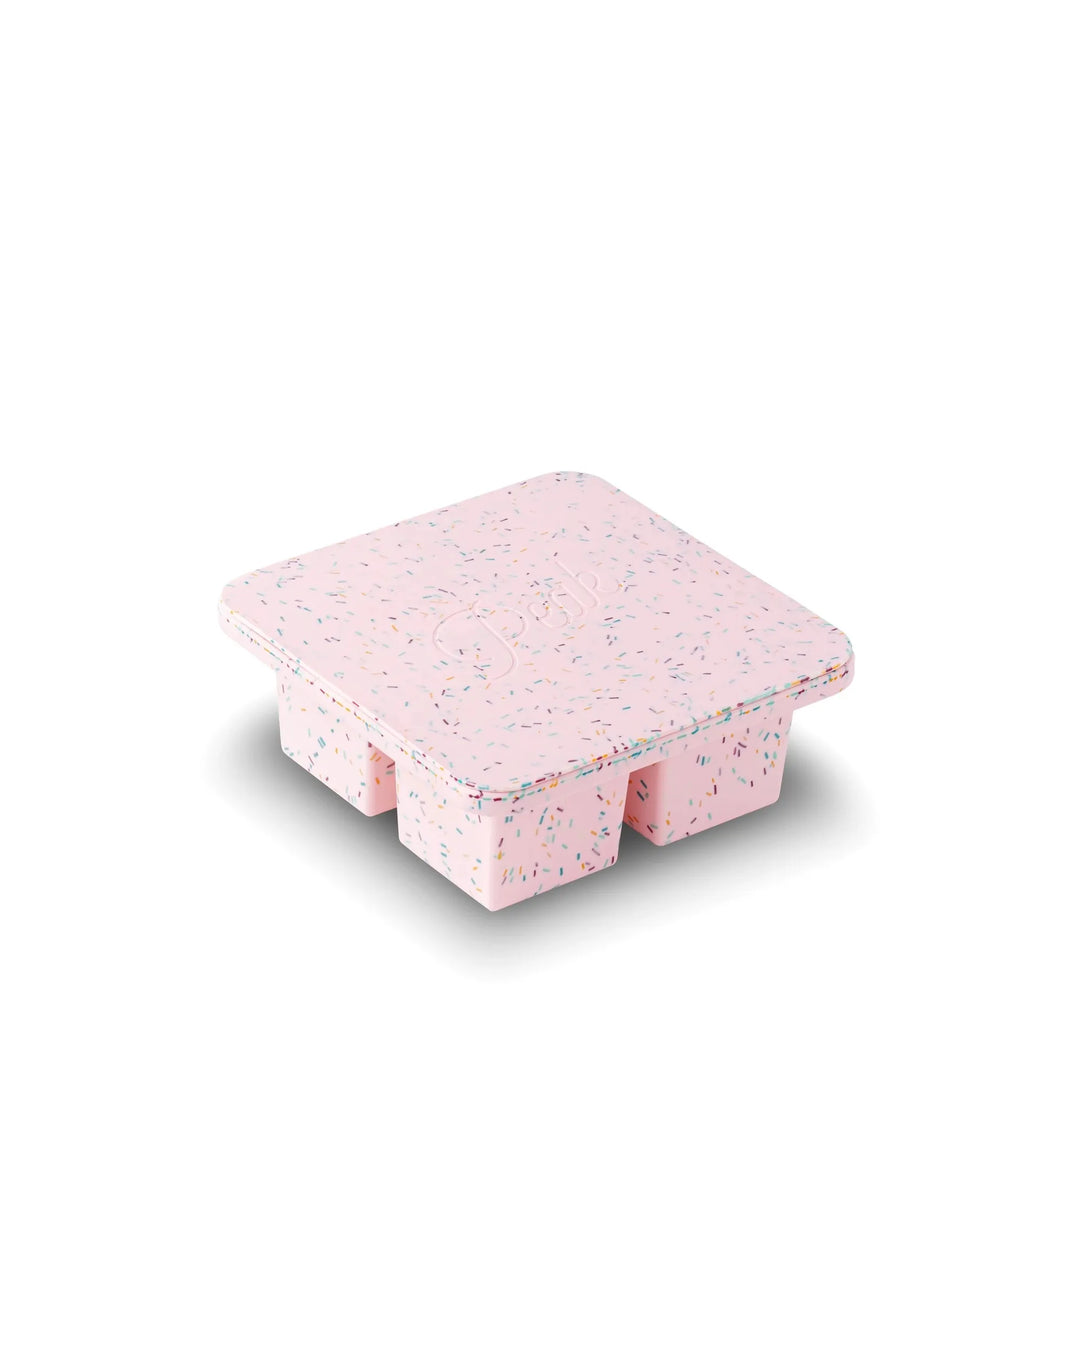 Extra Large Cube Tray - Peak Ice Works speckled pink | قالب مكعبات الثلج الكبيرة - بيك آيس ووركس - وردي